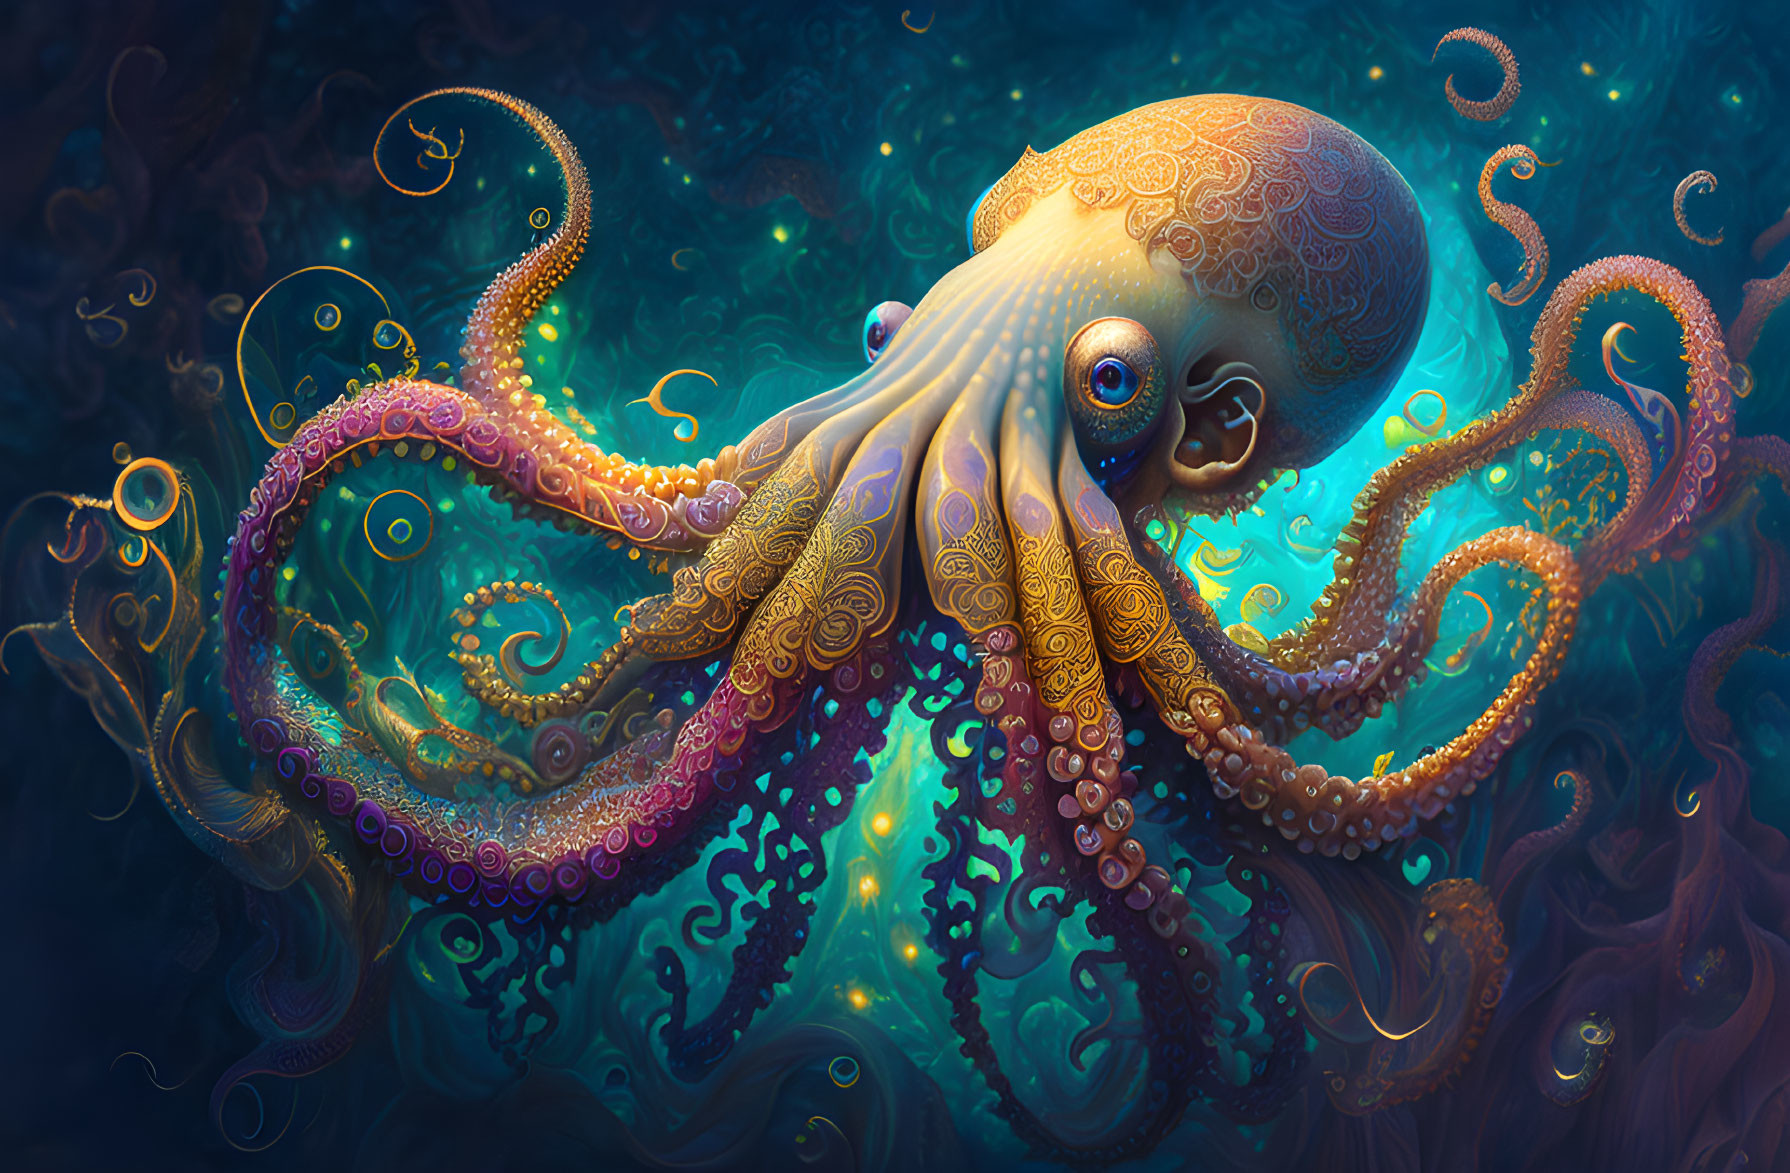 Intricately designed octopus in mystical underwater scene